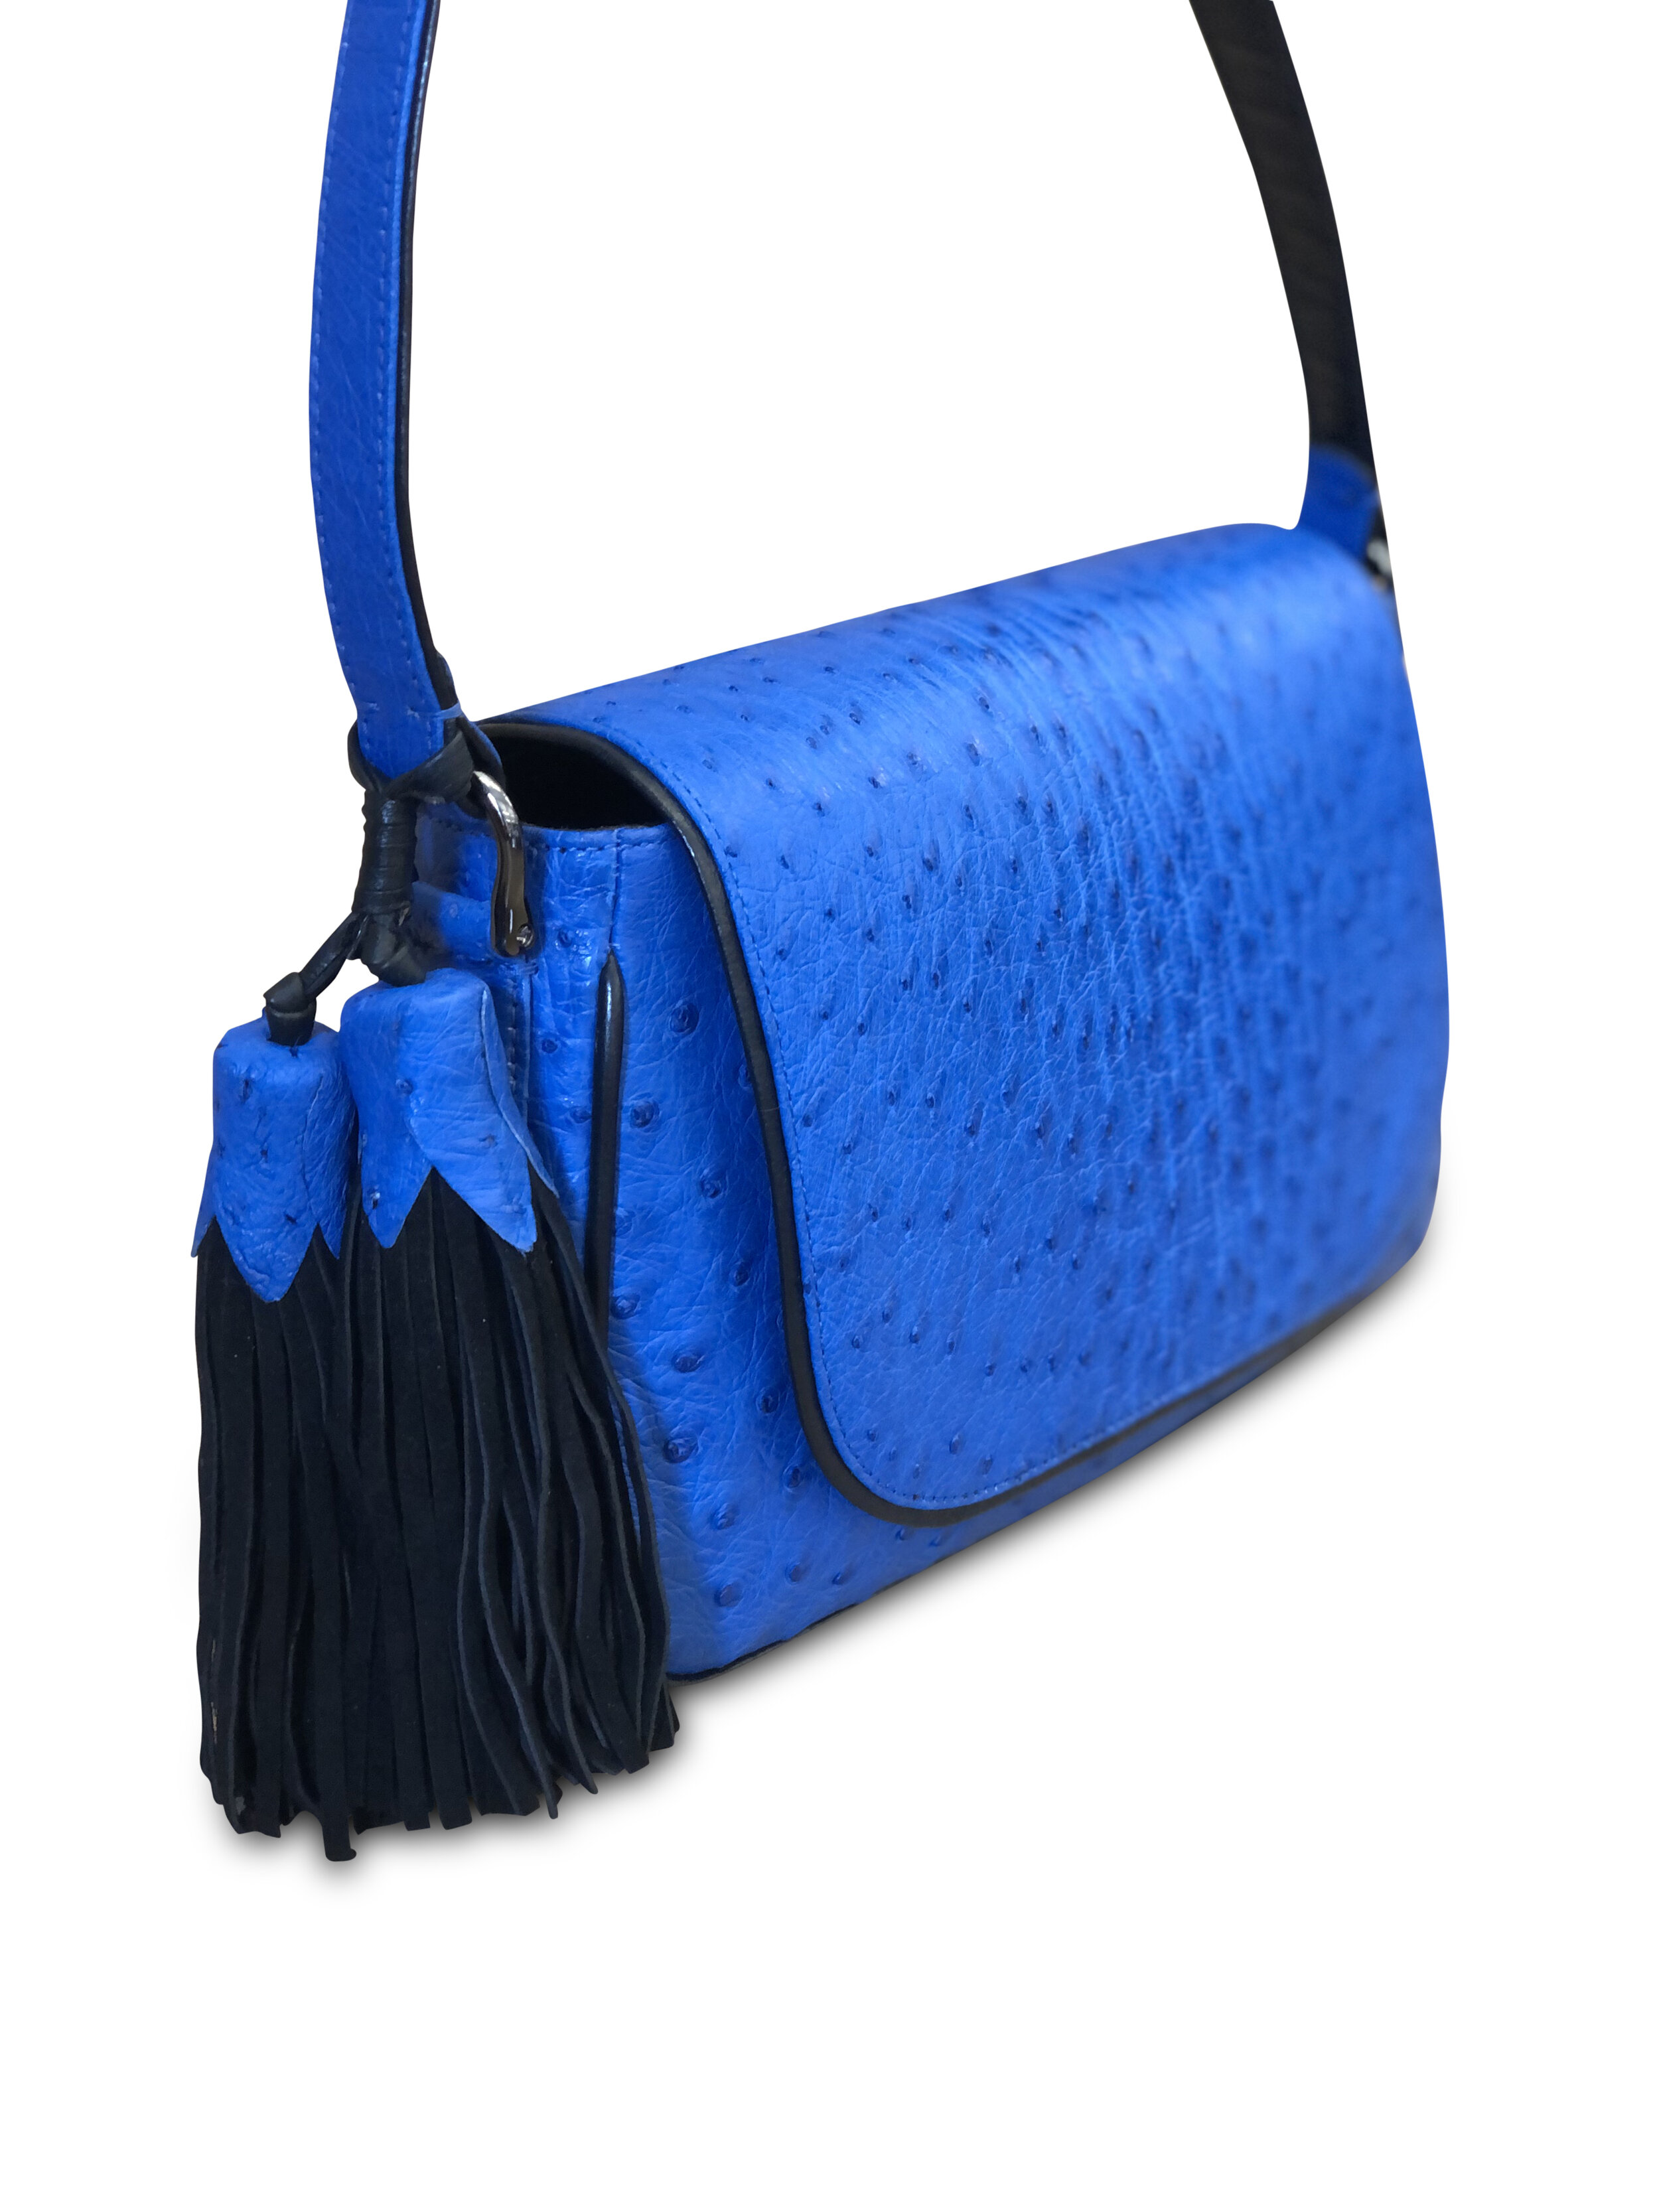 Zatchels Celeste Handmade Leather Bag - Royal Blue